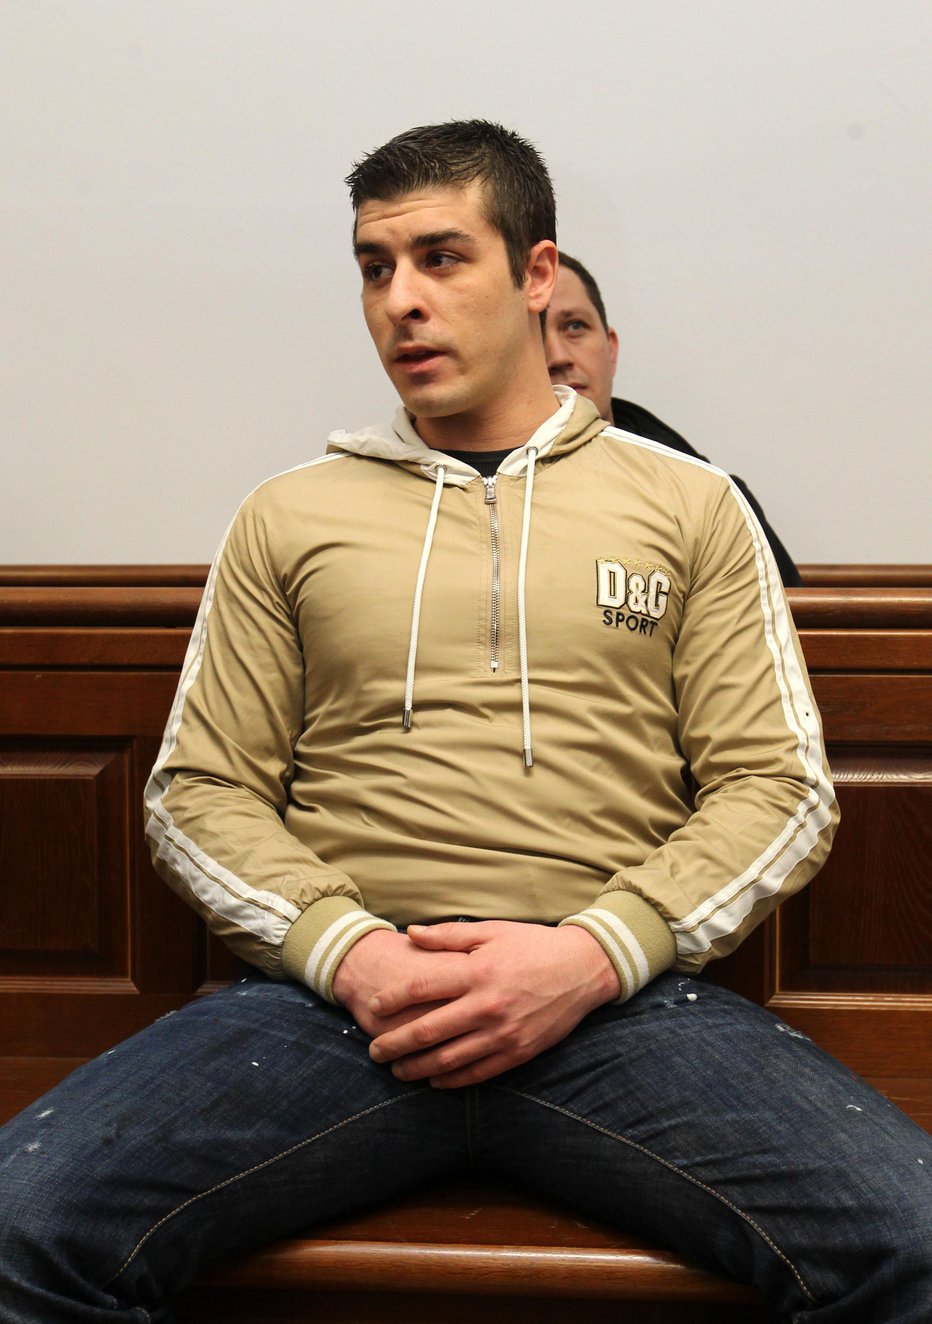 Fotografija: Dušanu Jovoviću so spet zvišali zaporno kazen. FOTO: DEJAN JAVORNIK